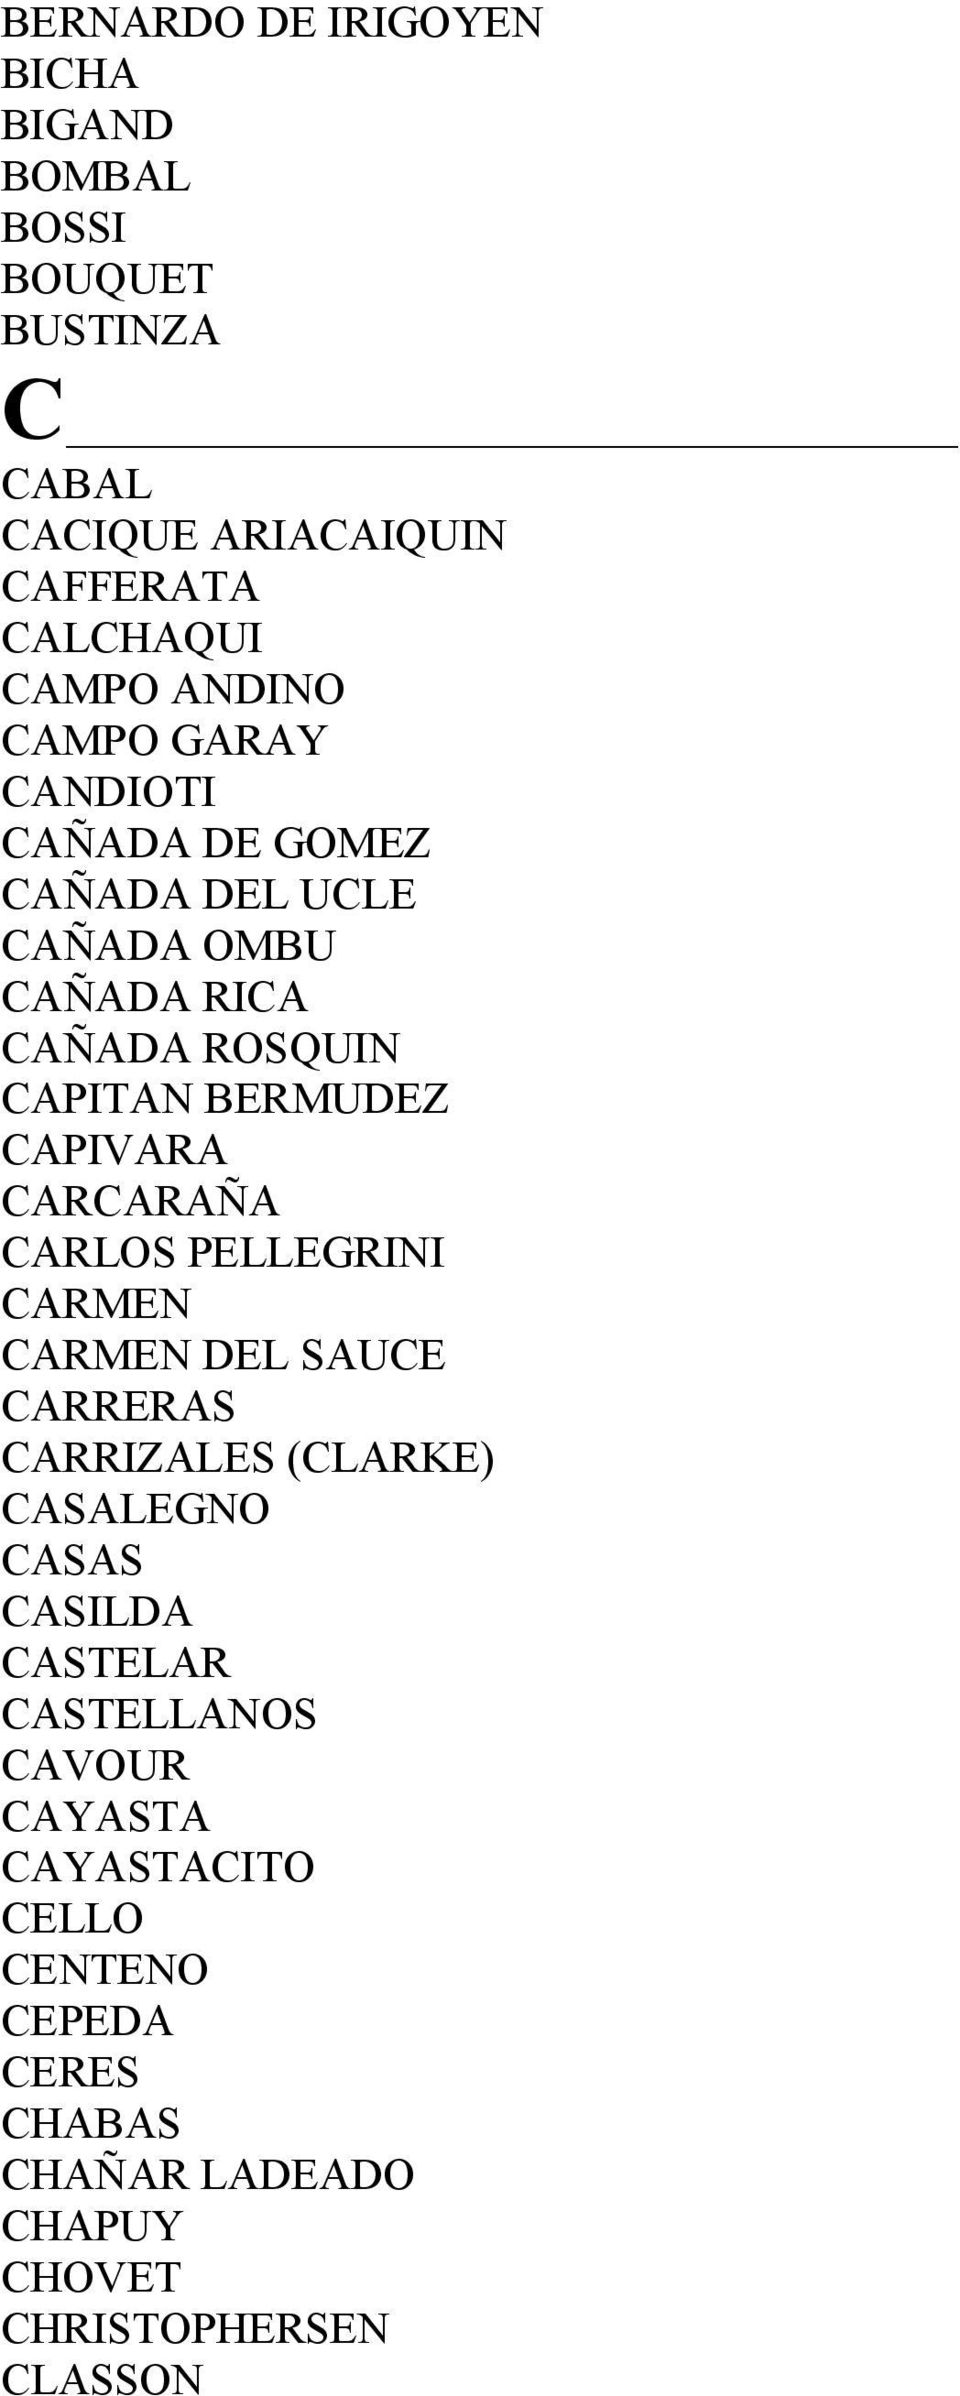 CAPIVARA CARCARAÑA CARLOS PELLEGRINI CARMEN CARMEN DEL SAUCE CARRERAS CARRIZALES (CLARKE) CASALEGNO CASAS CASILDA